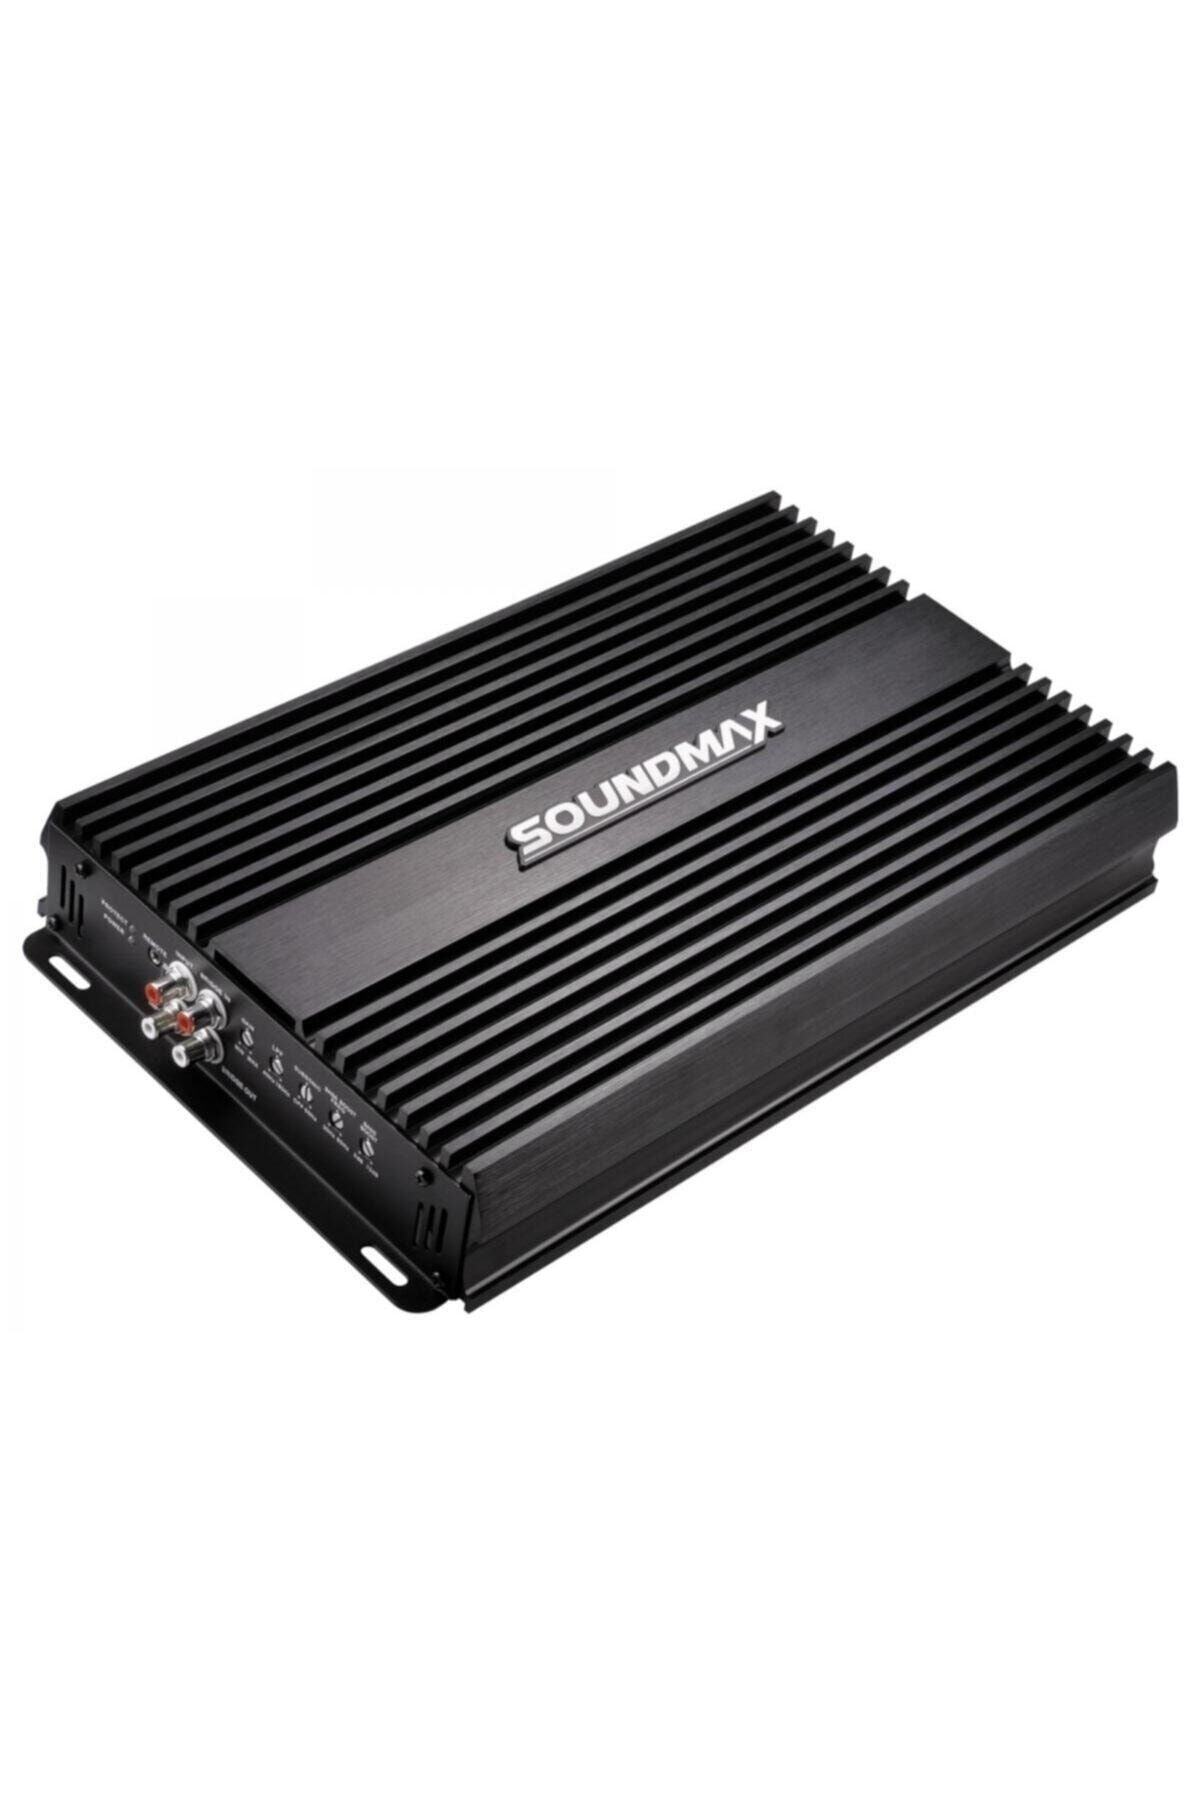 Soundmax Sx-4000.1d 13.000 Watt Bas Kontrol Aparatlı Anfi